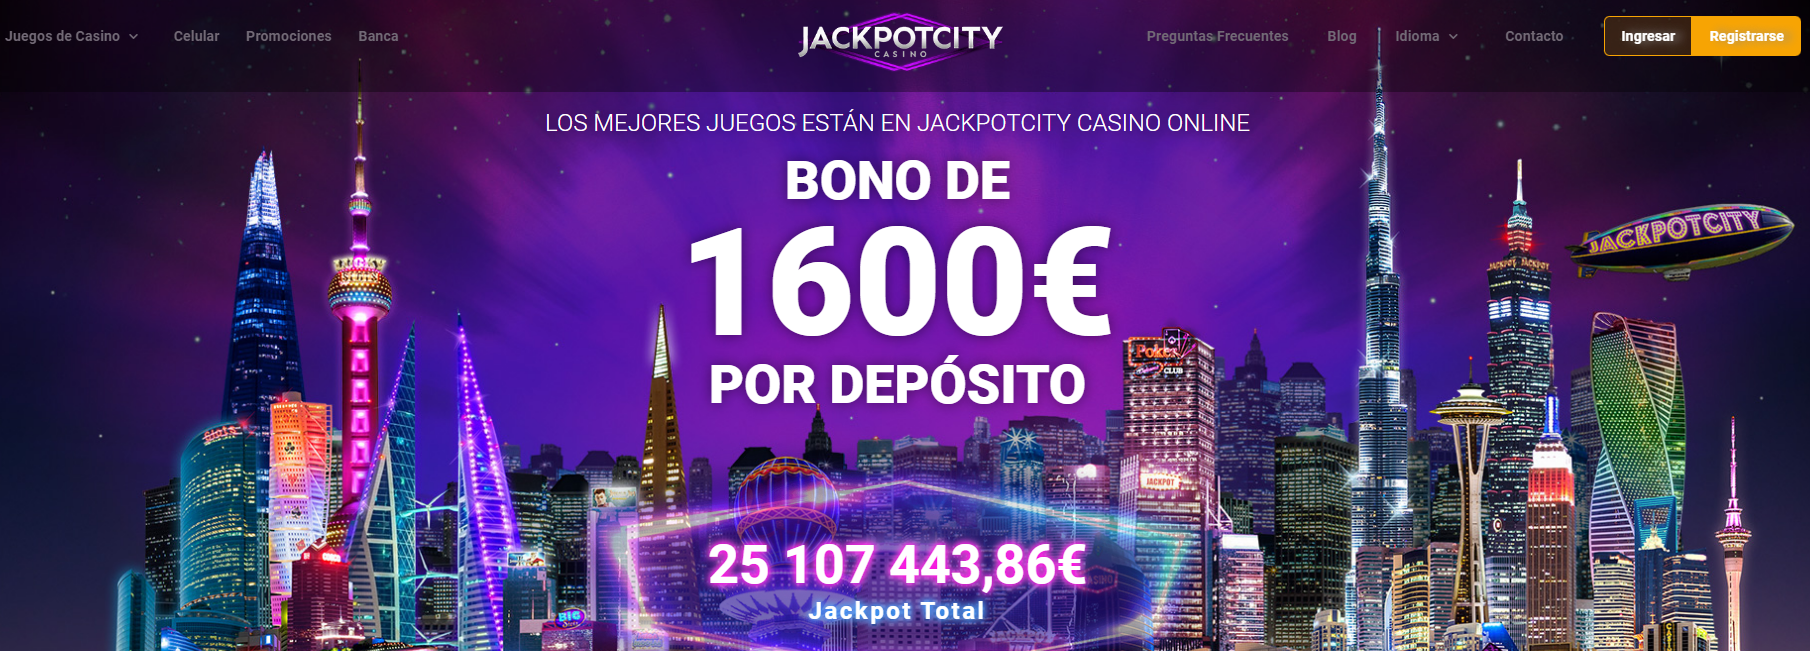 Jackpotcity casino Argentina